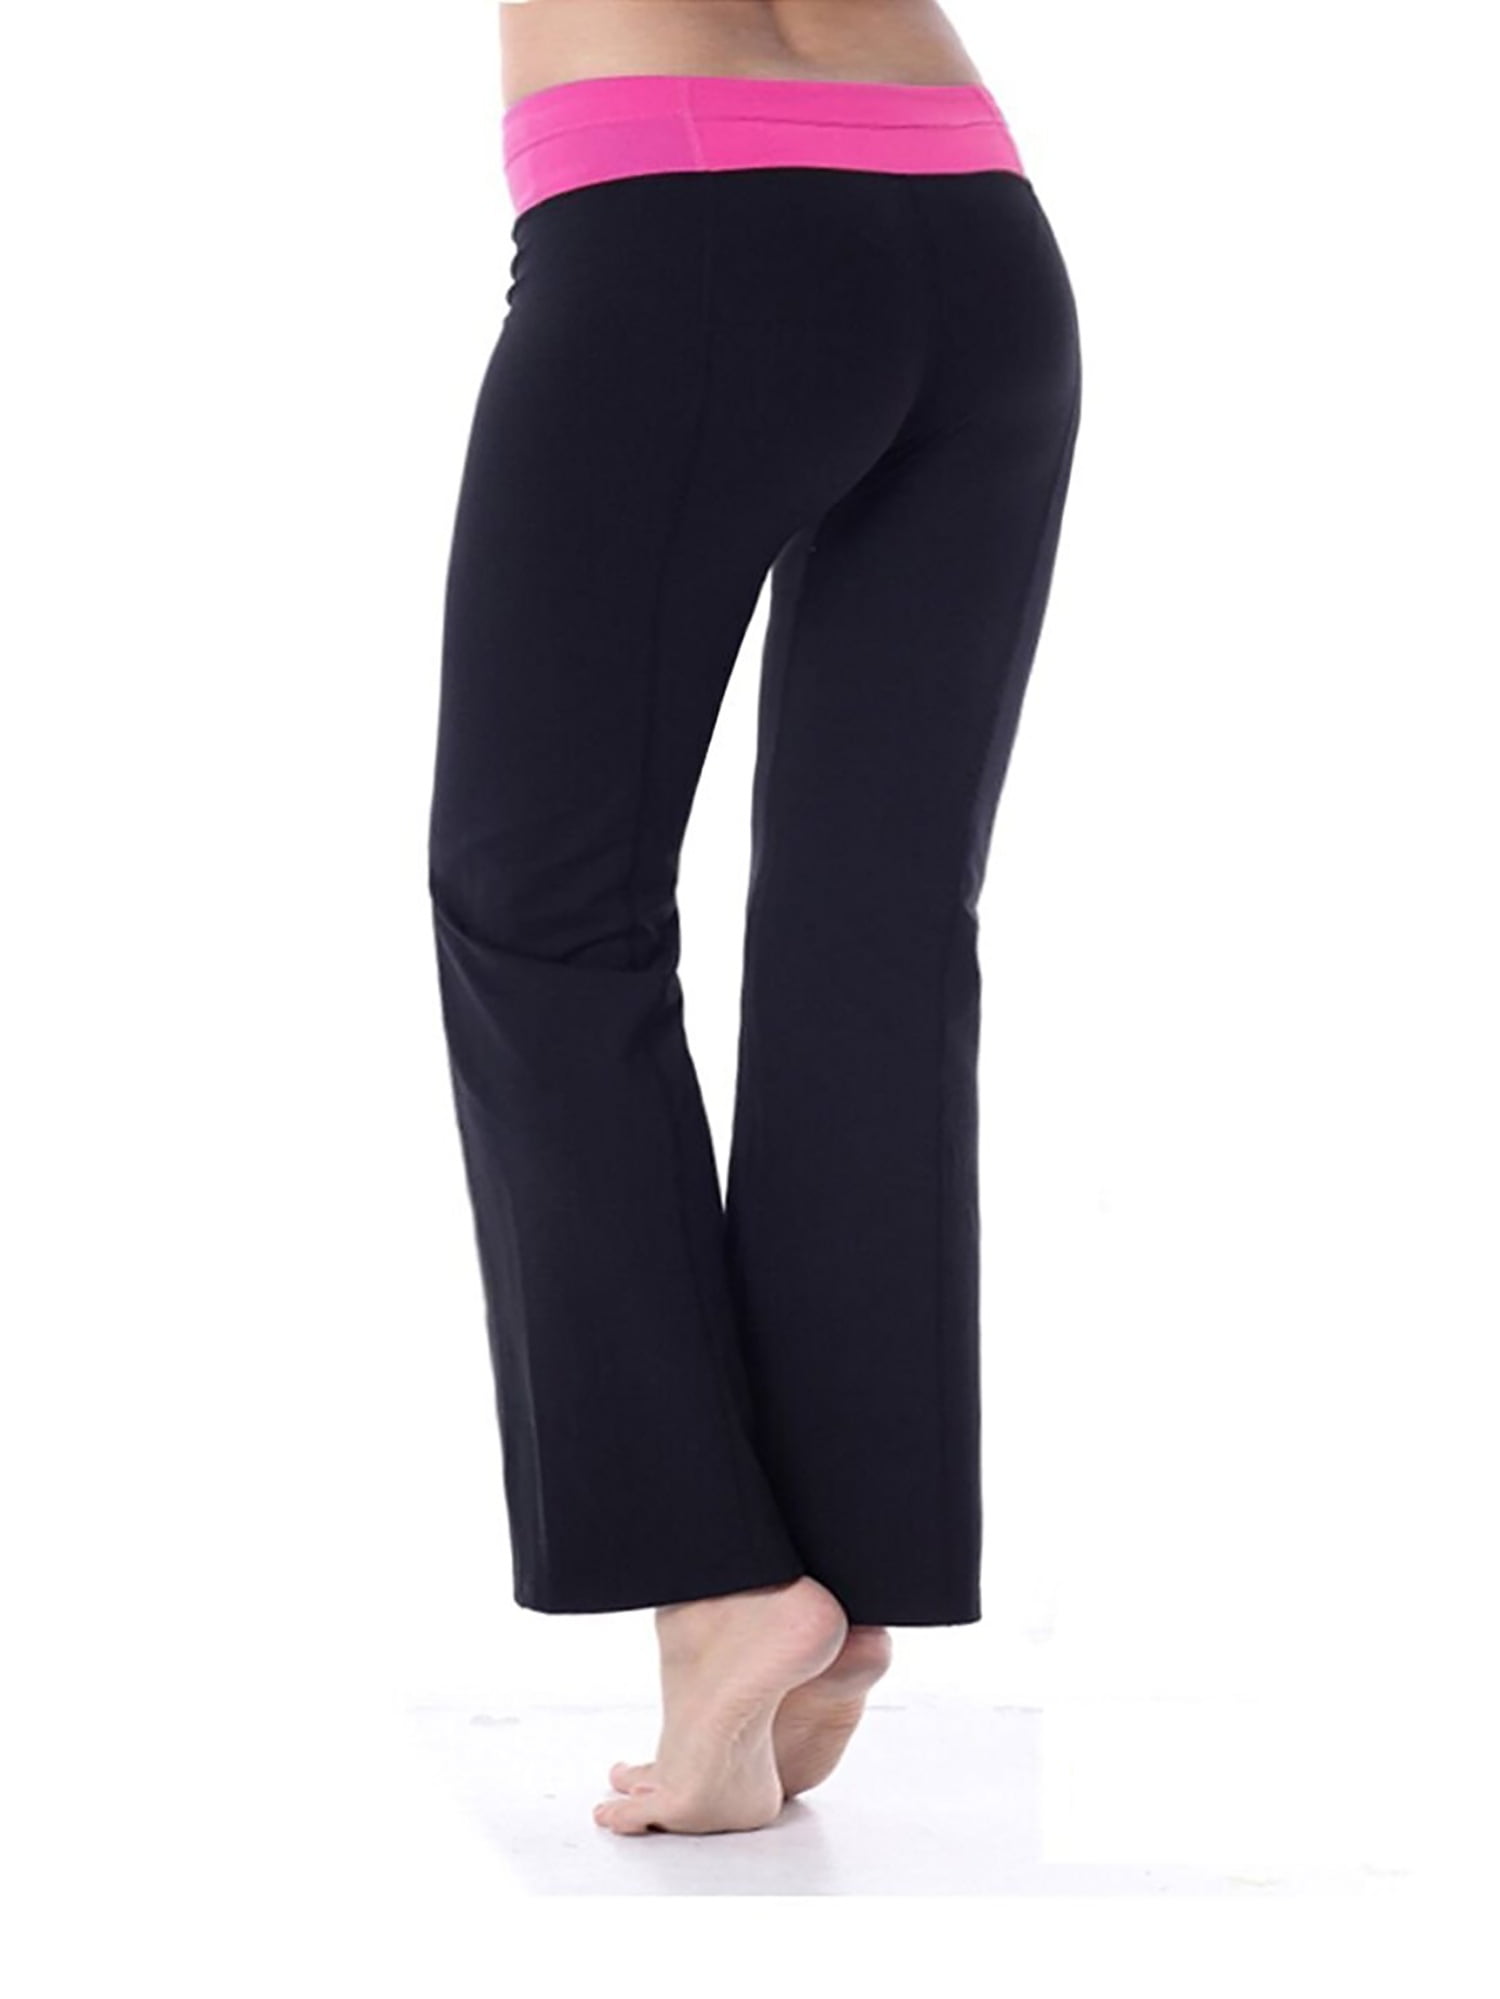 Women's Bootcut Yoga Pants Flared w/ Pockets High Waist Workout  Bootleg Leggings | eBay